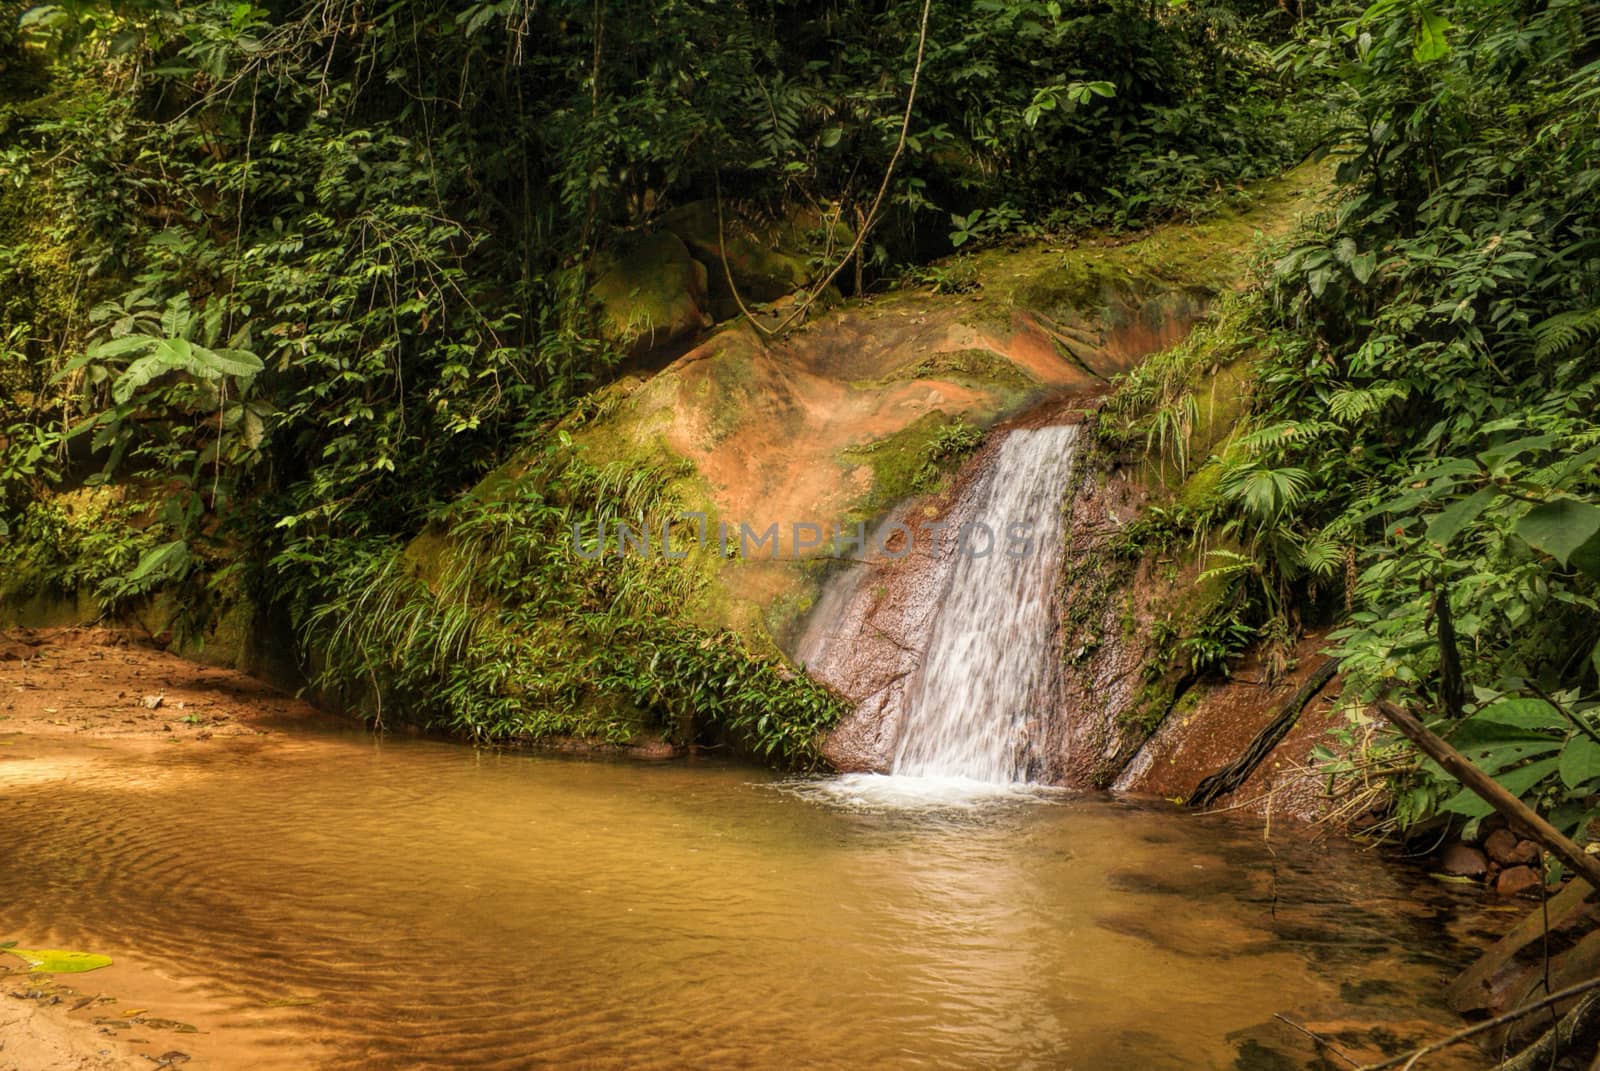 Water cascade in Bolivian jungle forest